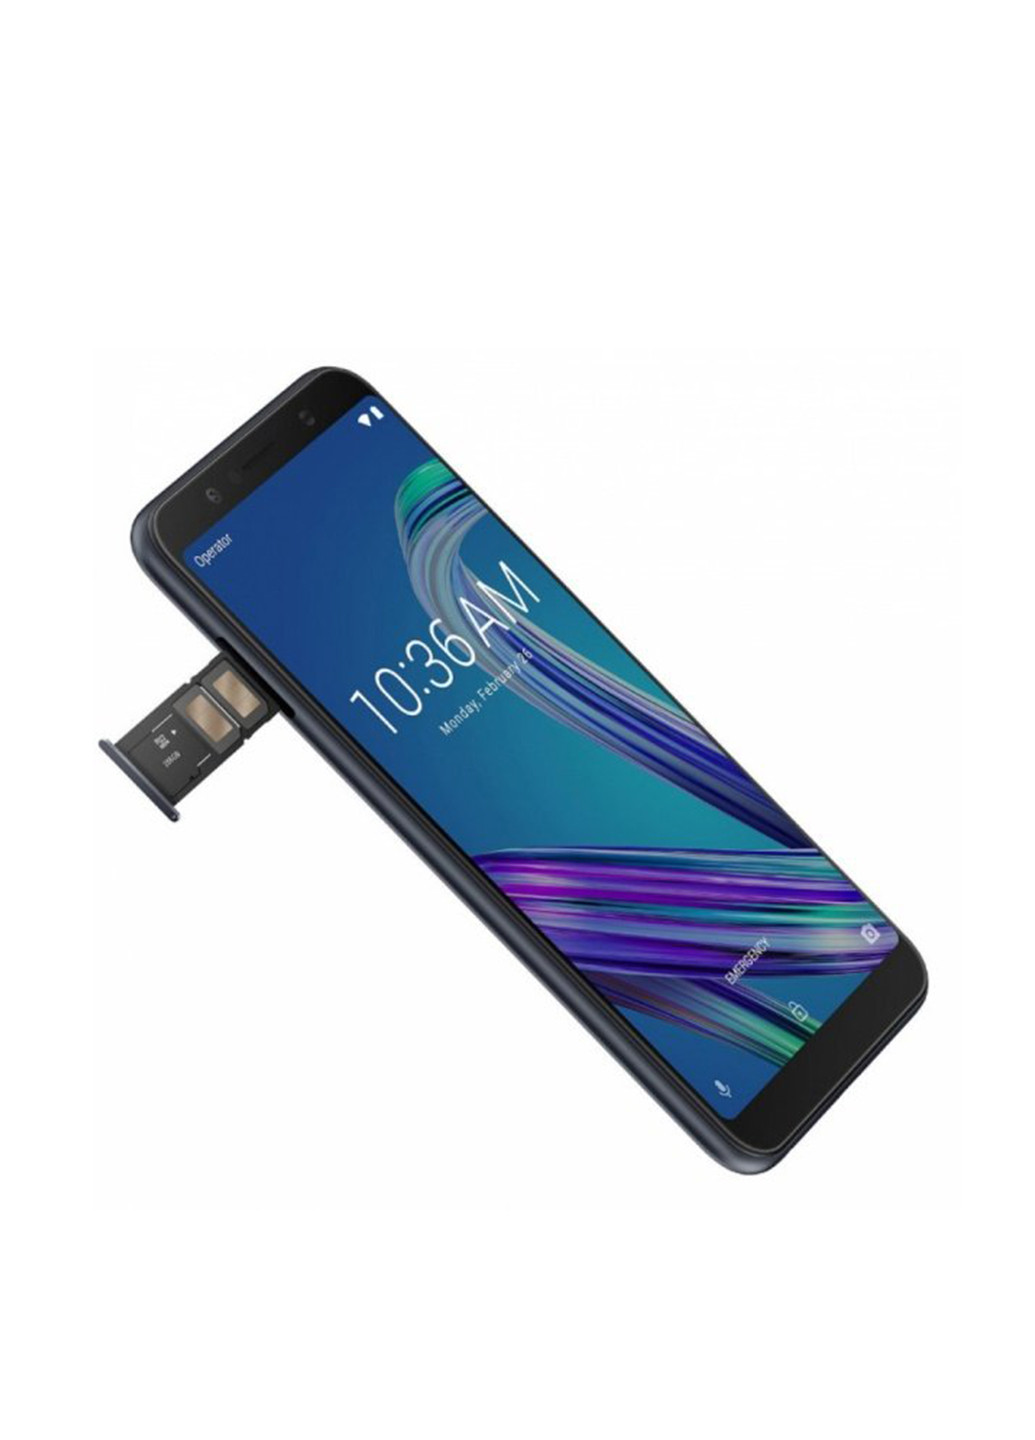 Смартфон Asus ZenFone Max Pro (M1) 3/32GB Black (ZB602KL-4A144WW) чёрный